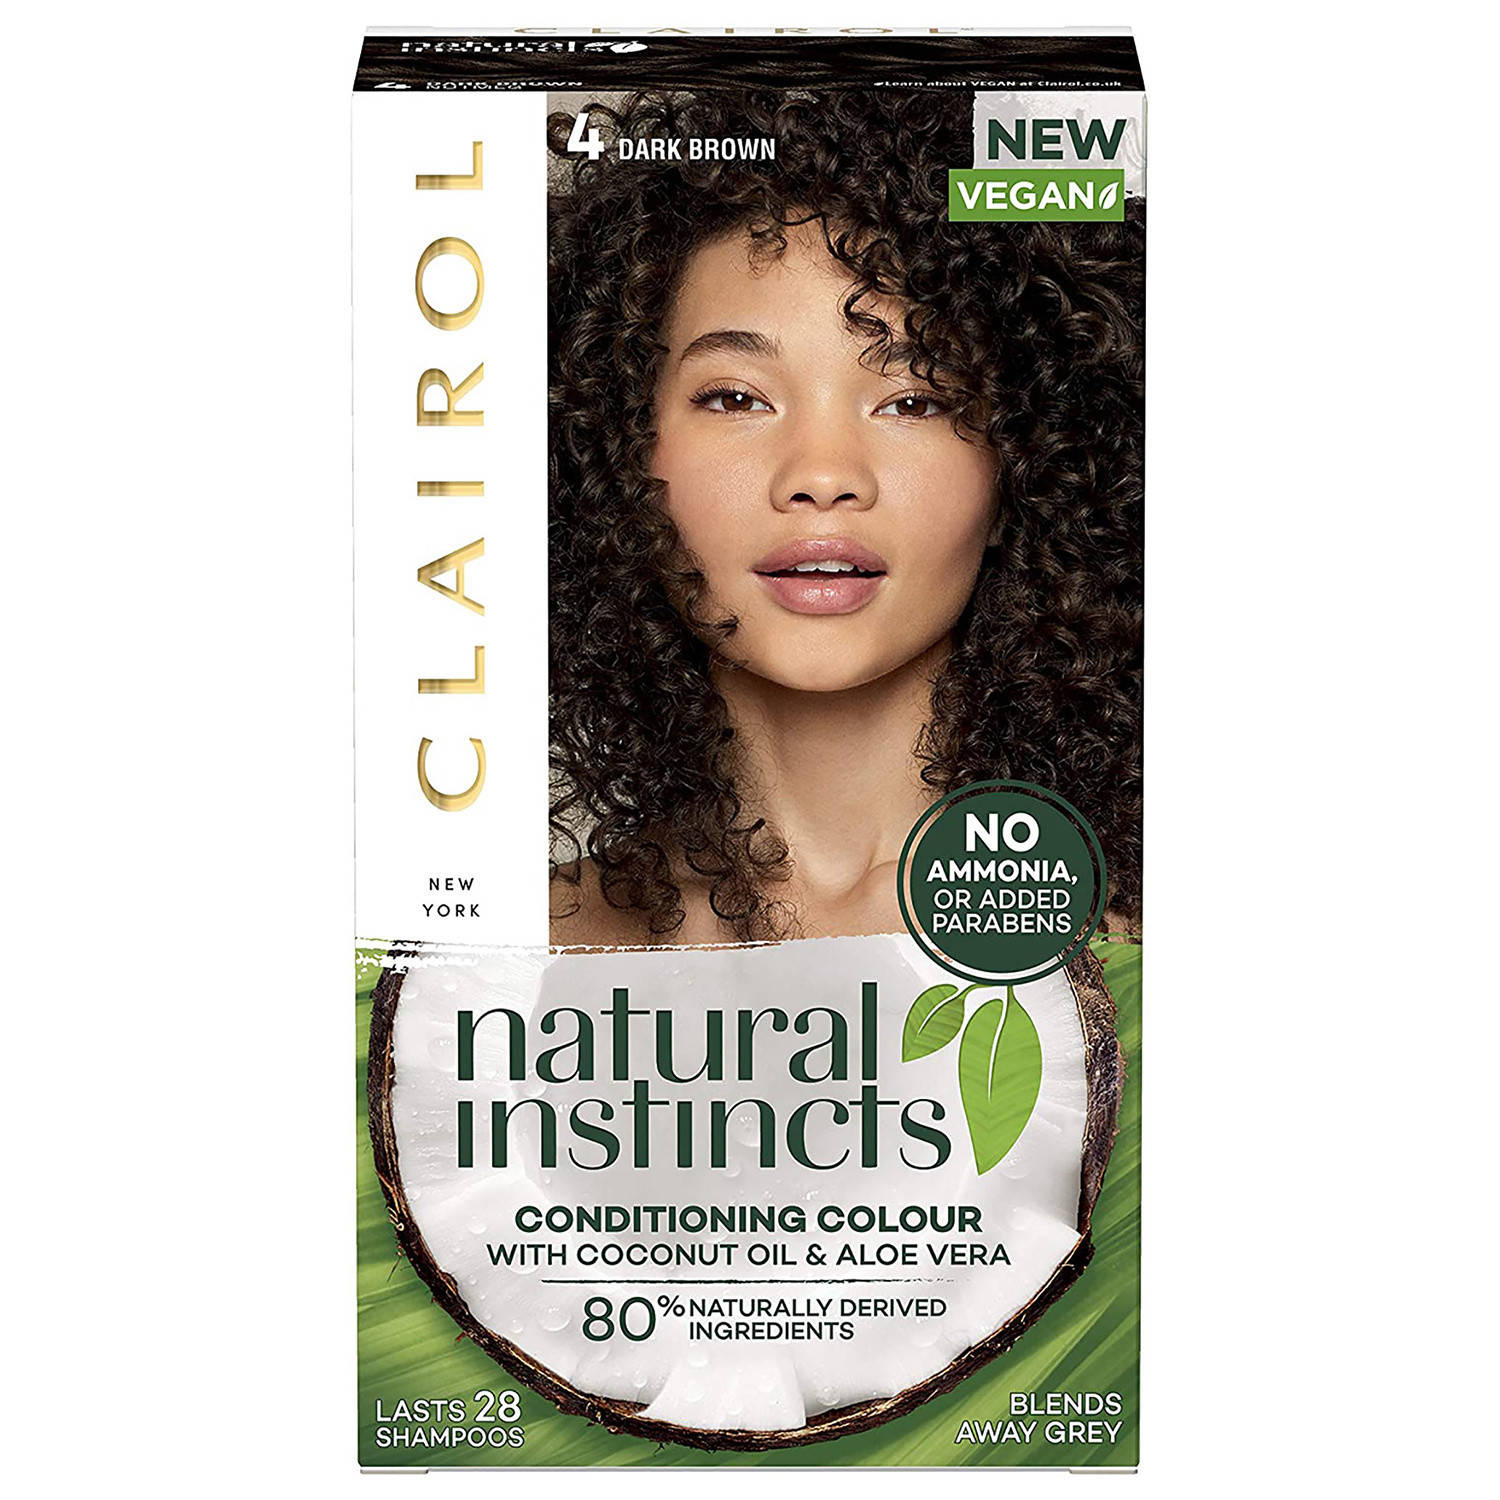 Clairol Natural Instincts Hair Dye 4 Dark Brown